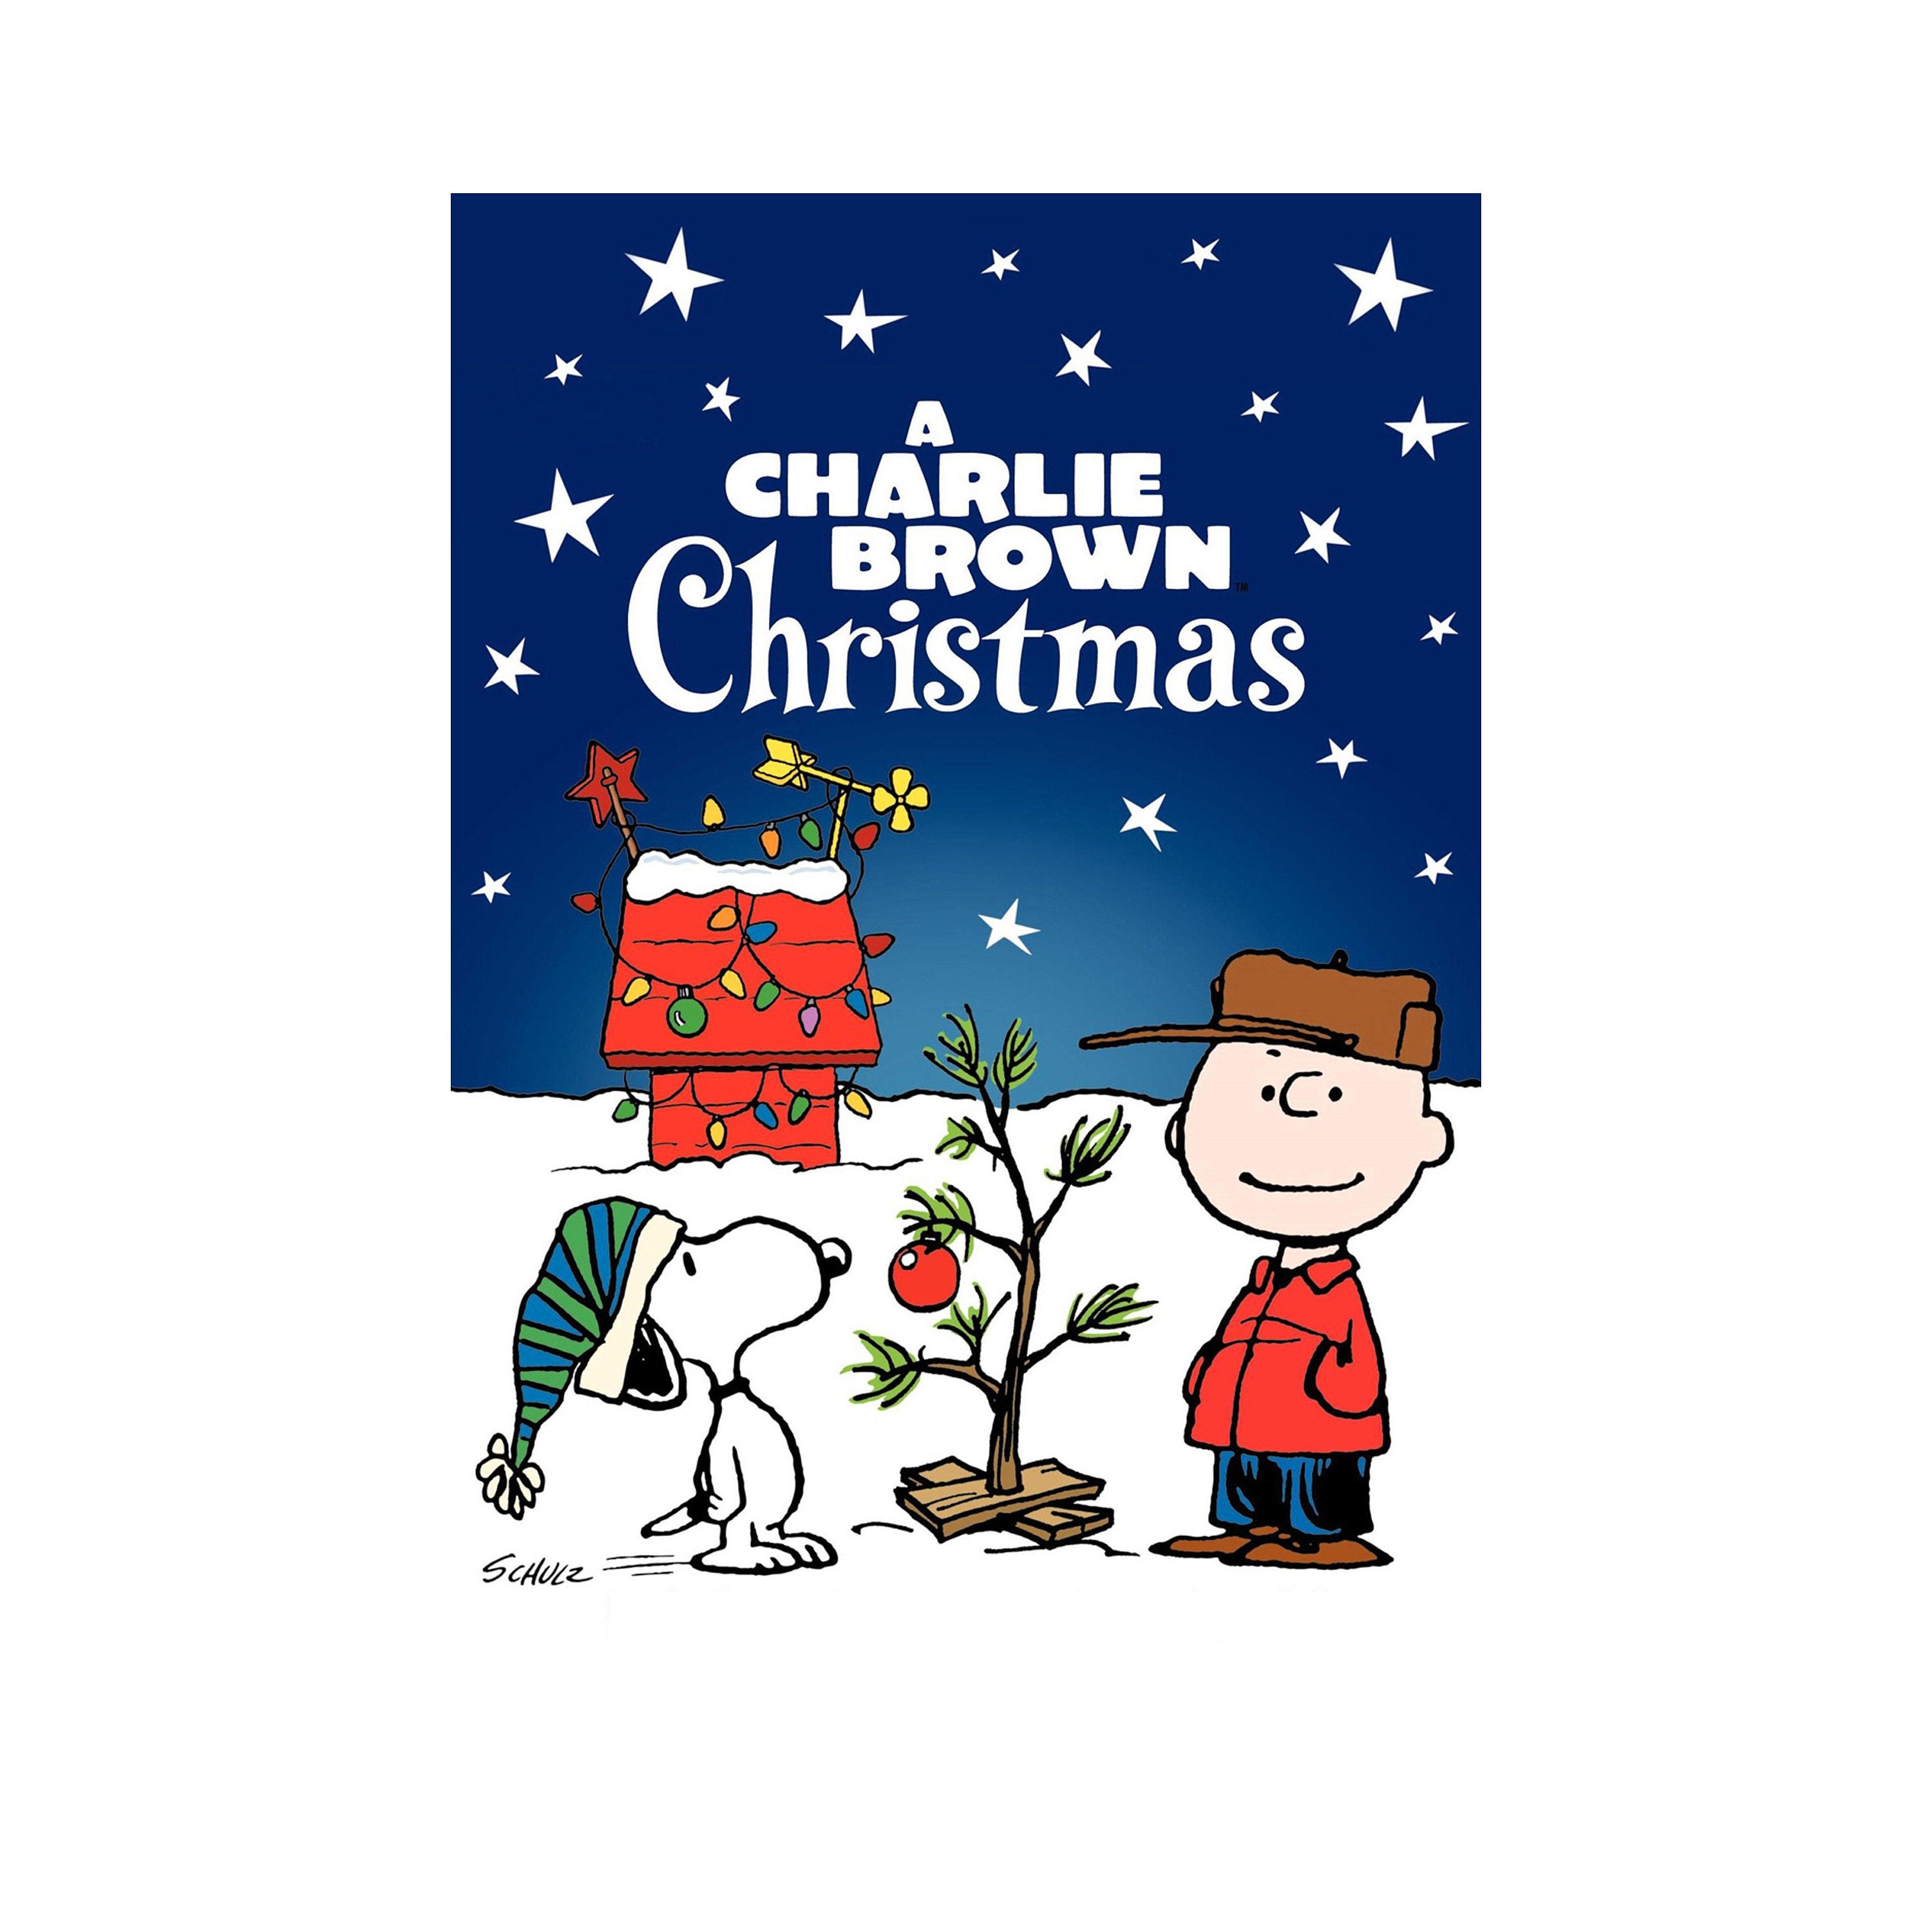 A Charlie Brown Christmas Movie Poster Quality Glossy Print Photo Wall Art Snoopy Charles Schulz Sizes 8x10 11x17 16x20 22x28 24x36 27x40